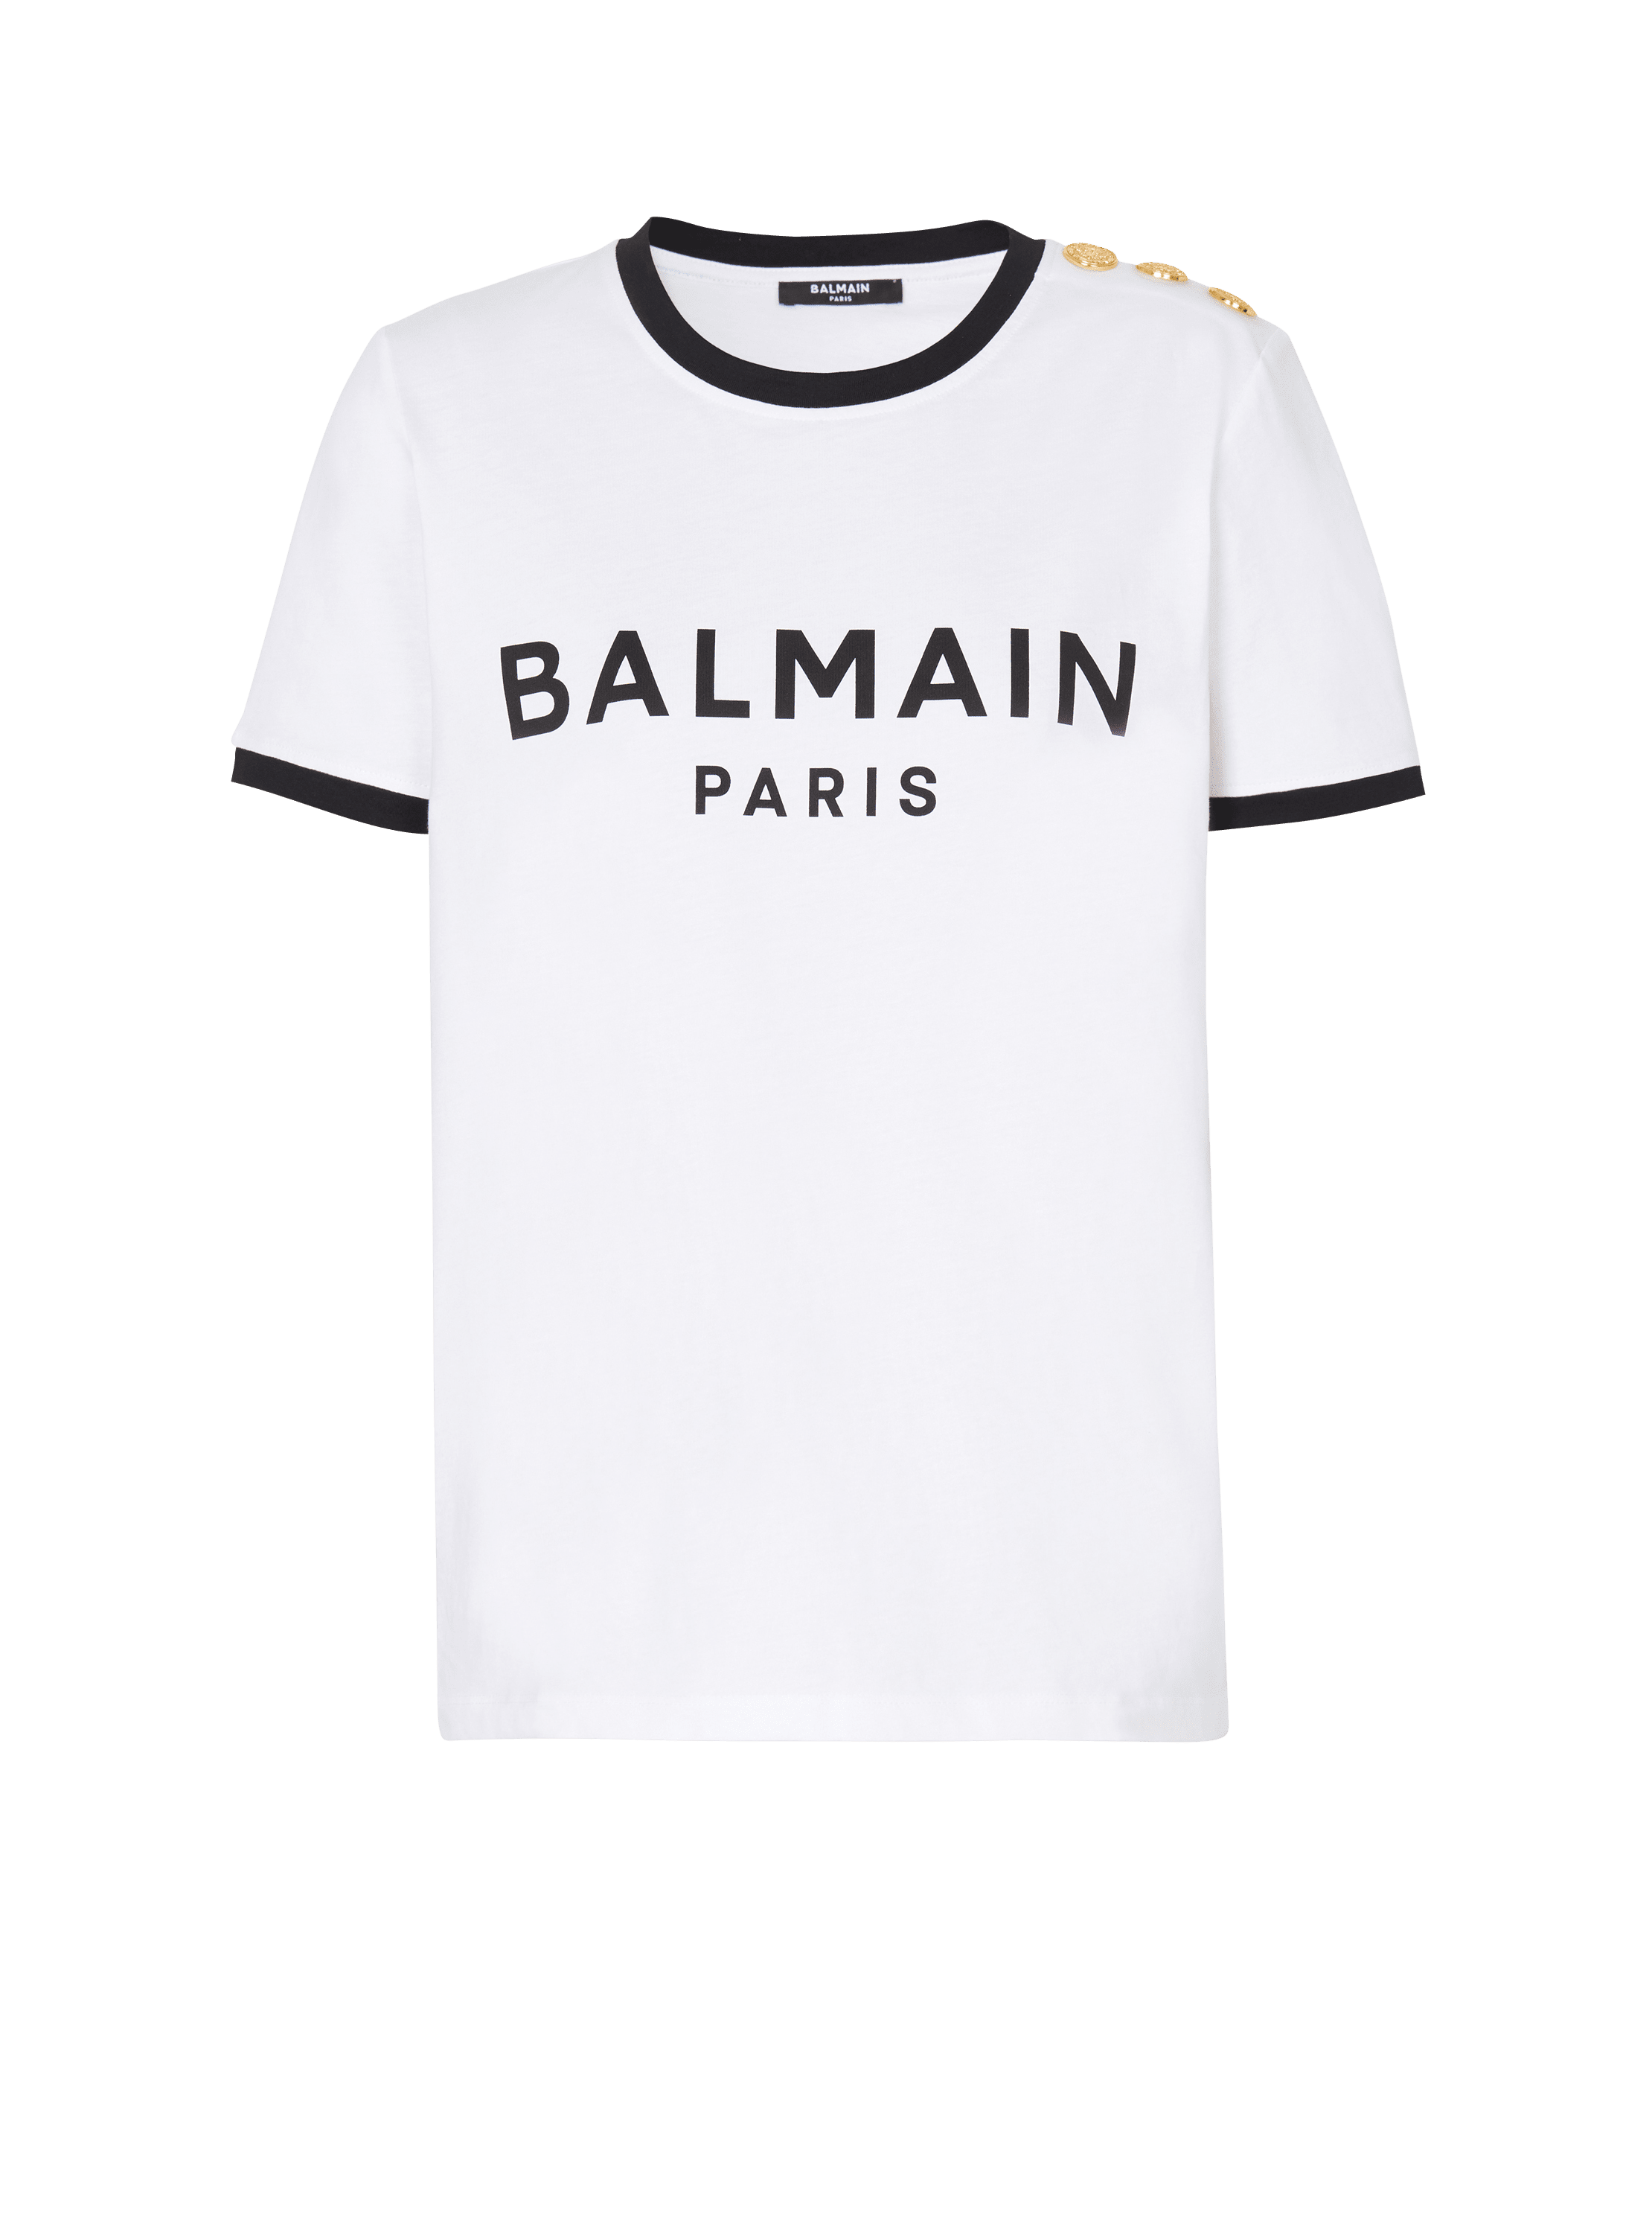 Balmain Paris 3-button T-shirt, black, hi-res